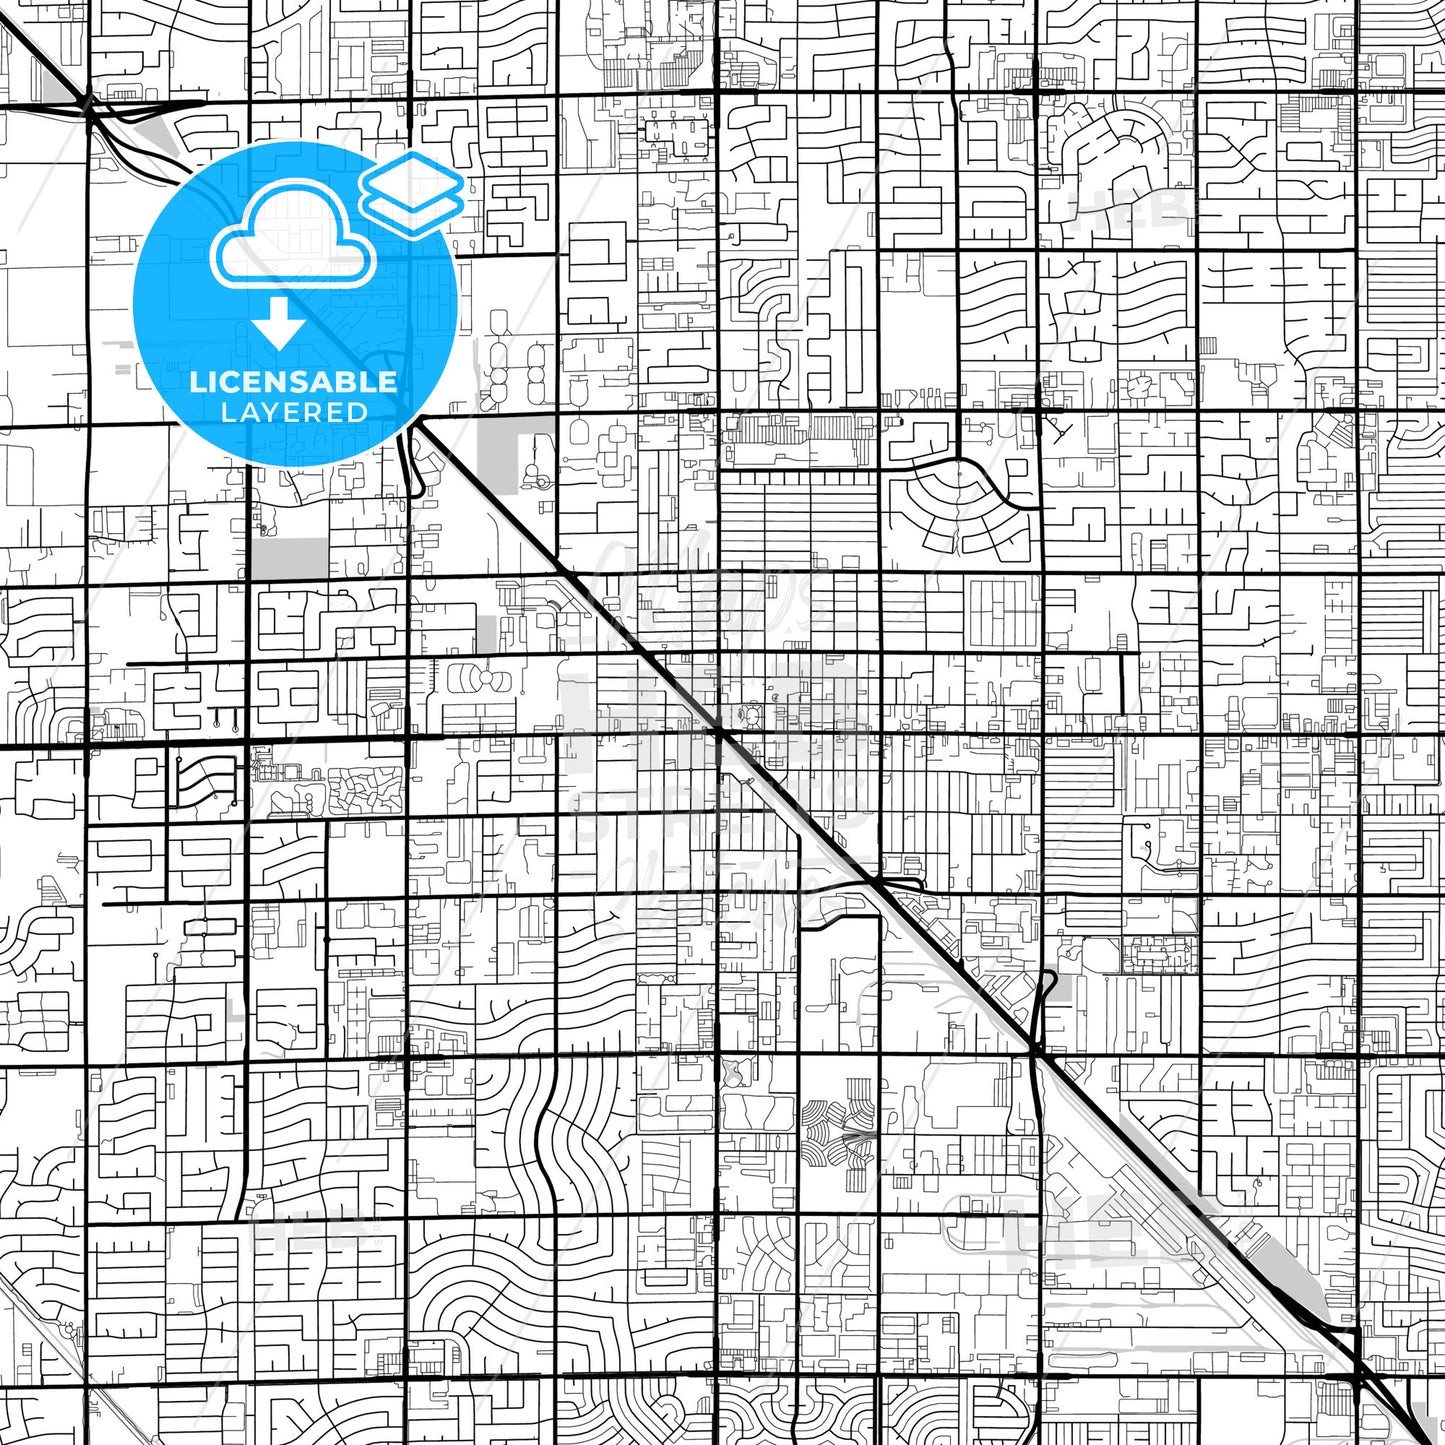 Layered PDF map of Glendale, Arizona, United States